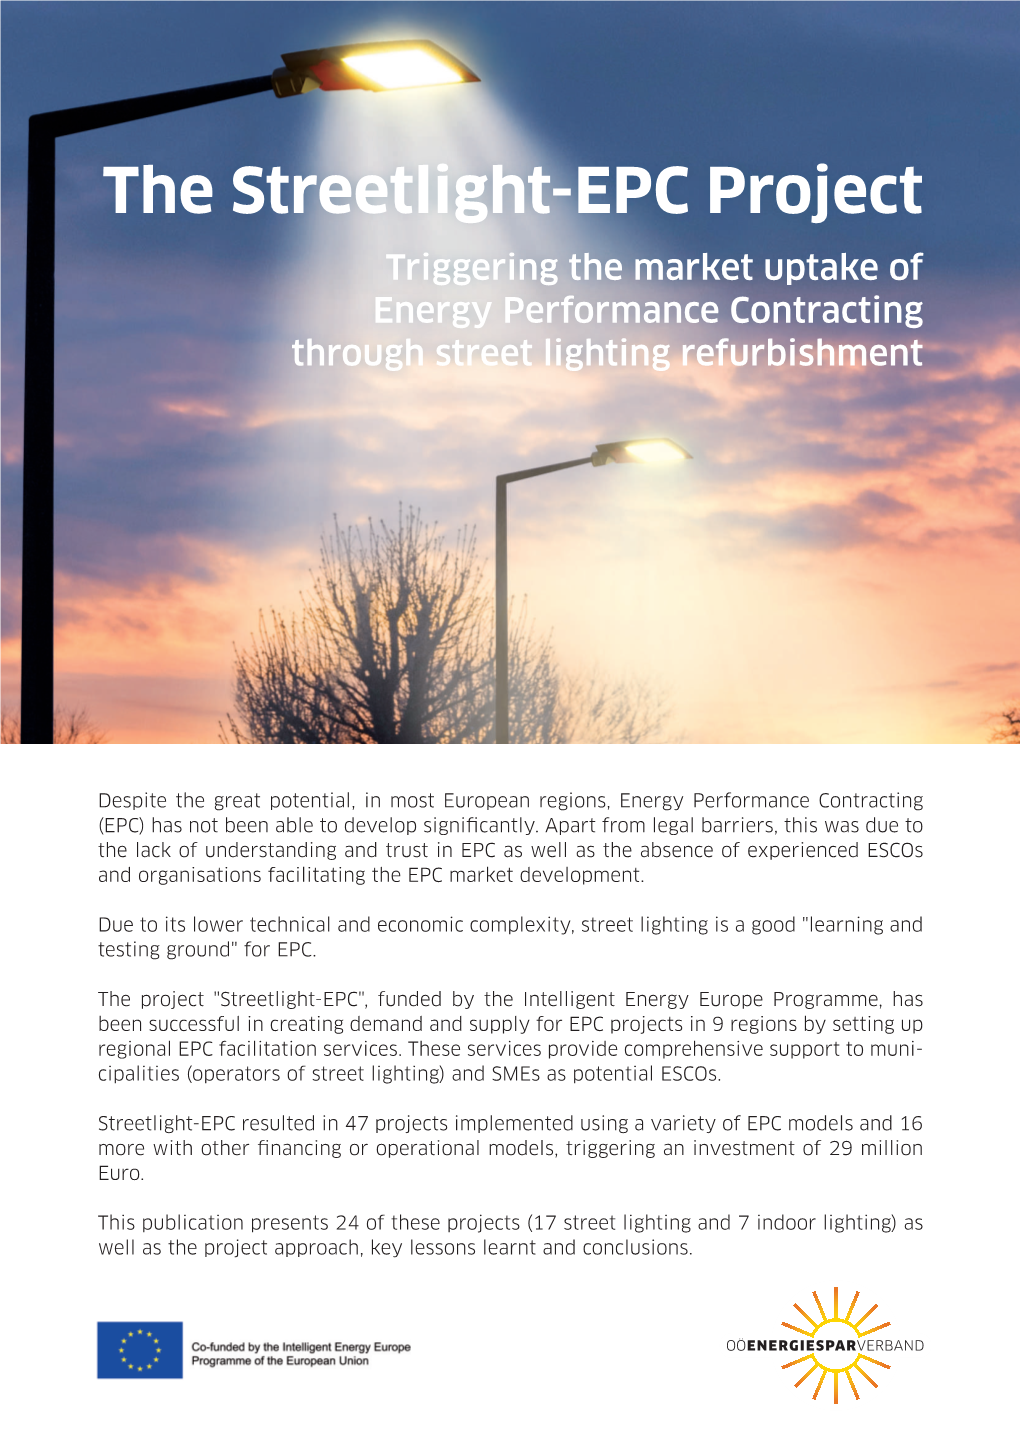 The Streetlight-EPC Project Triggering the Market Uptake of Energy Performance Contracting Through Street Lighting Refurbishment